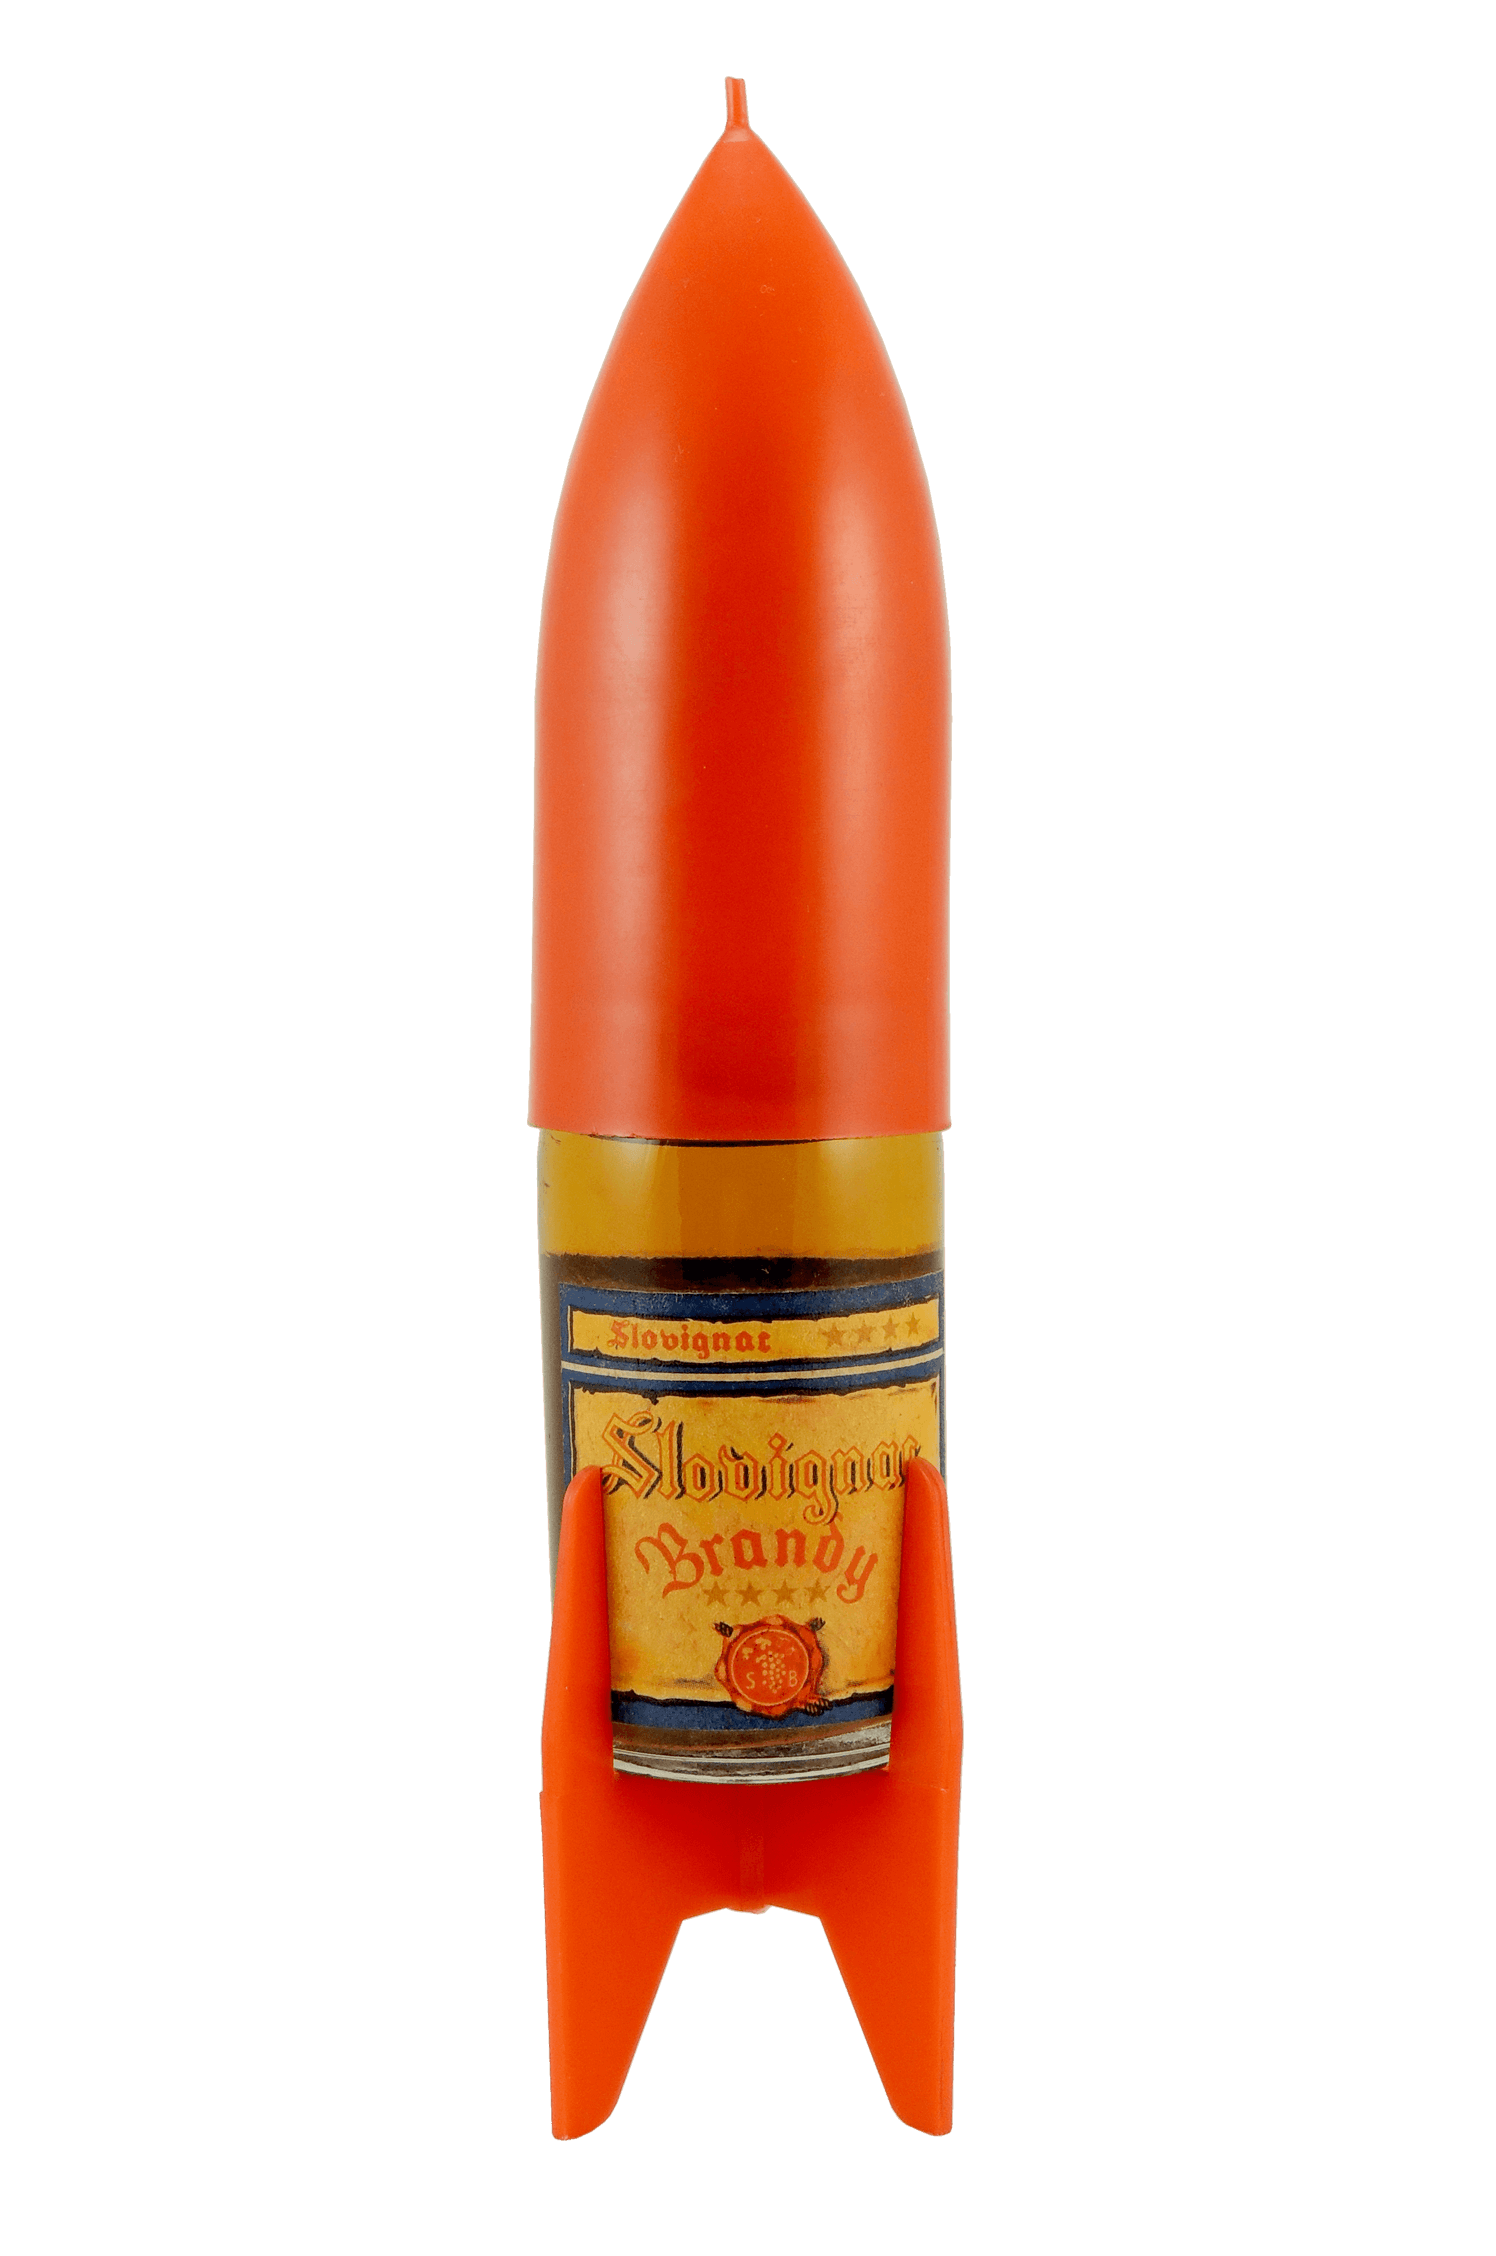 Slovignac Brandy